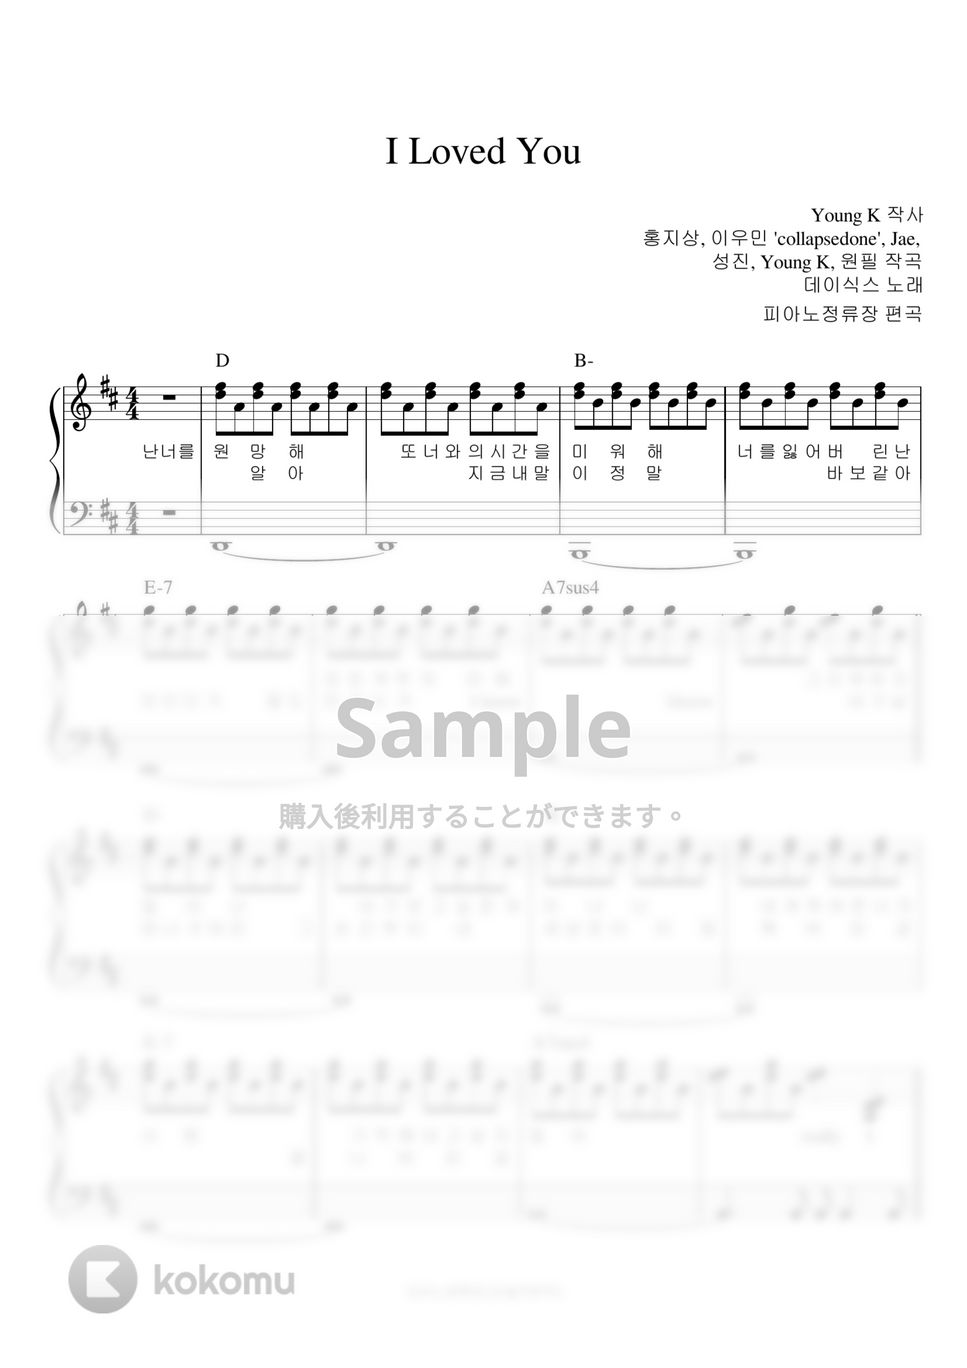 DAY6 - I Loved You (伴奏楽譜) by pianojeongryujang